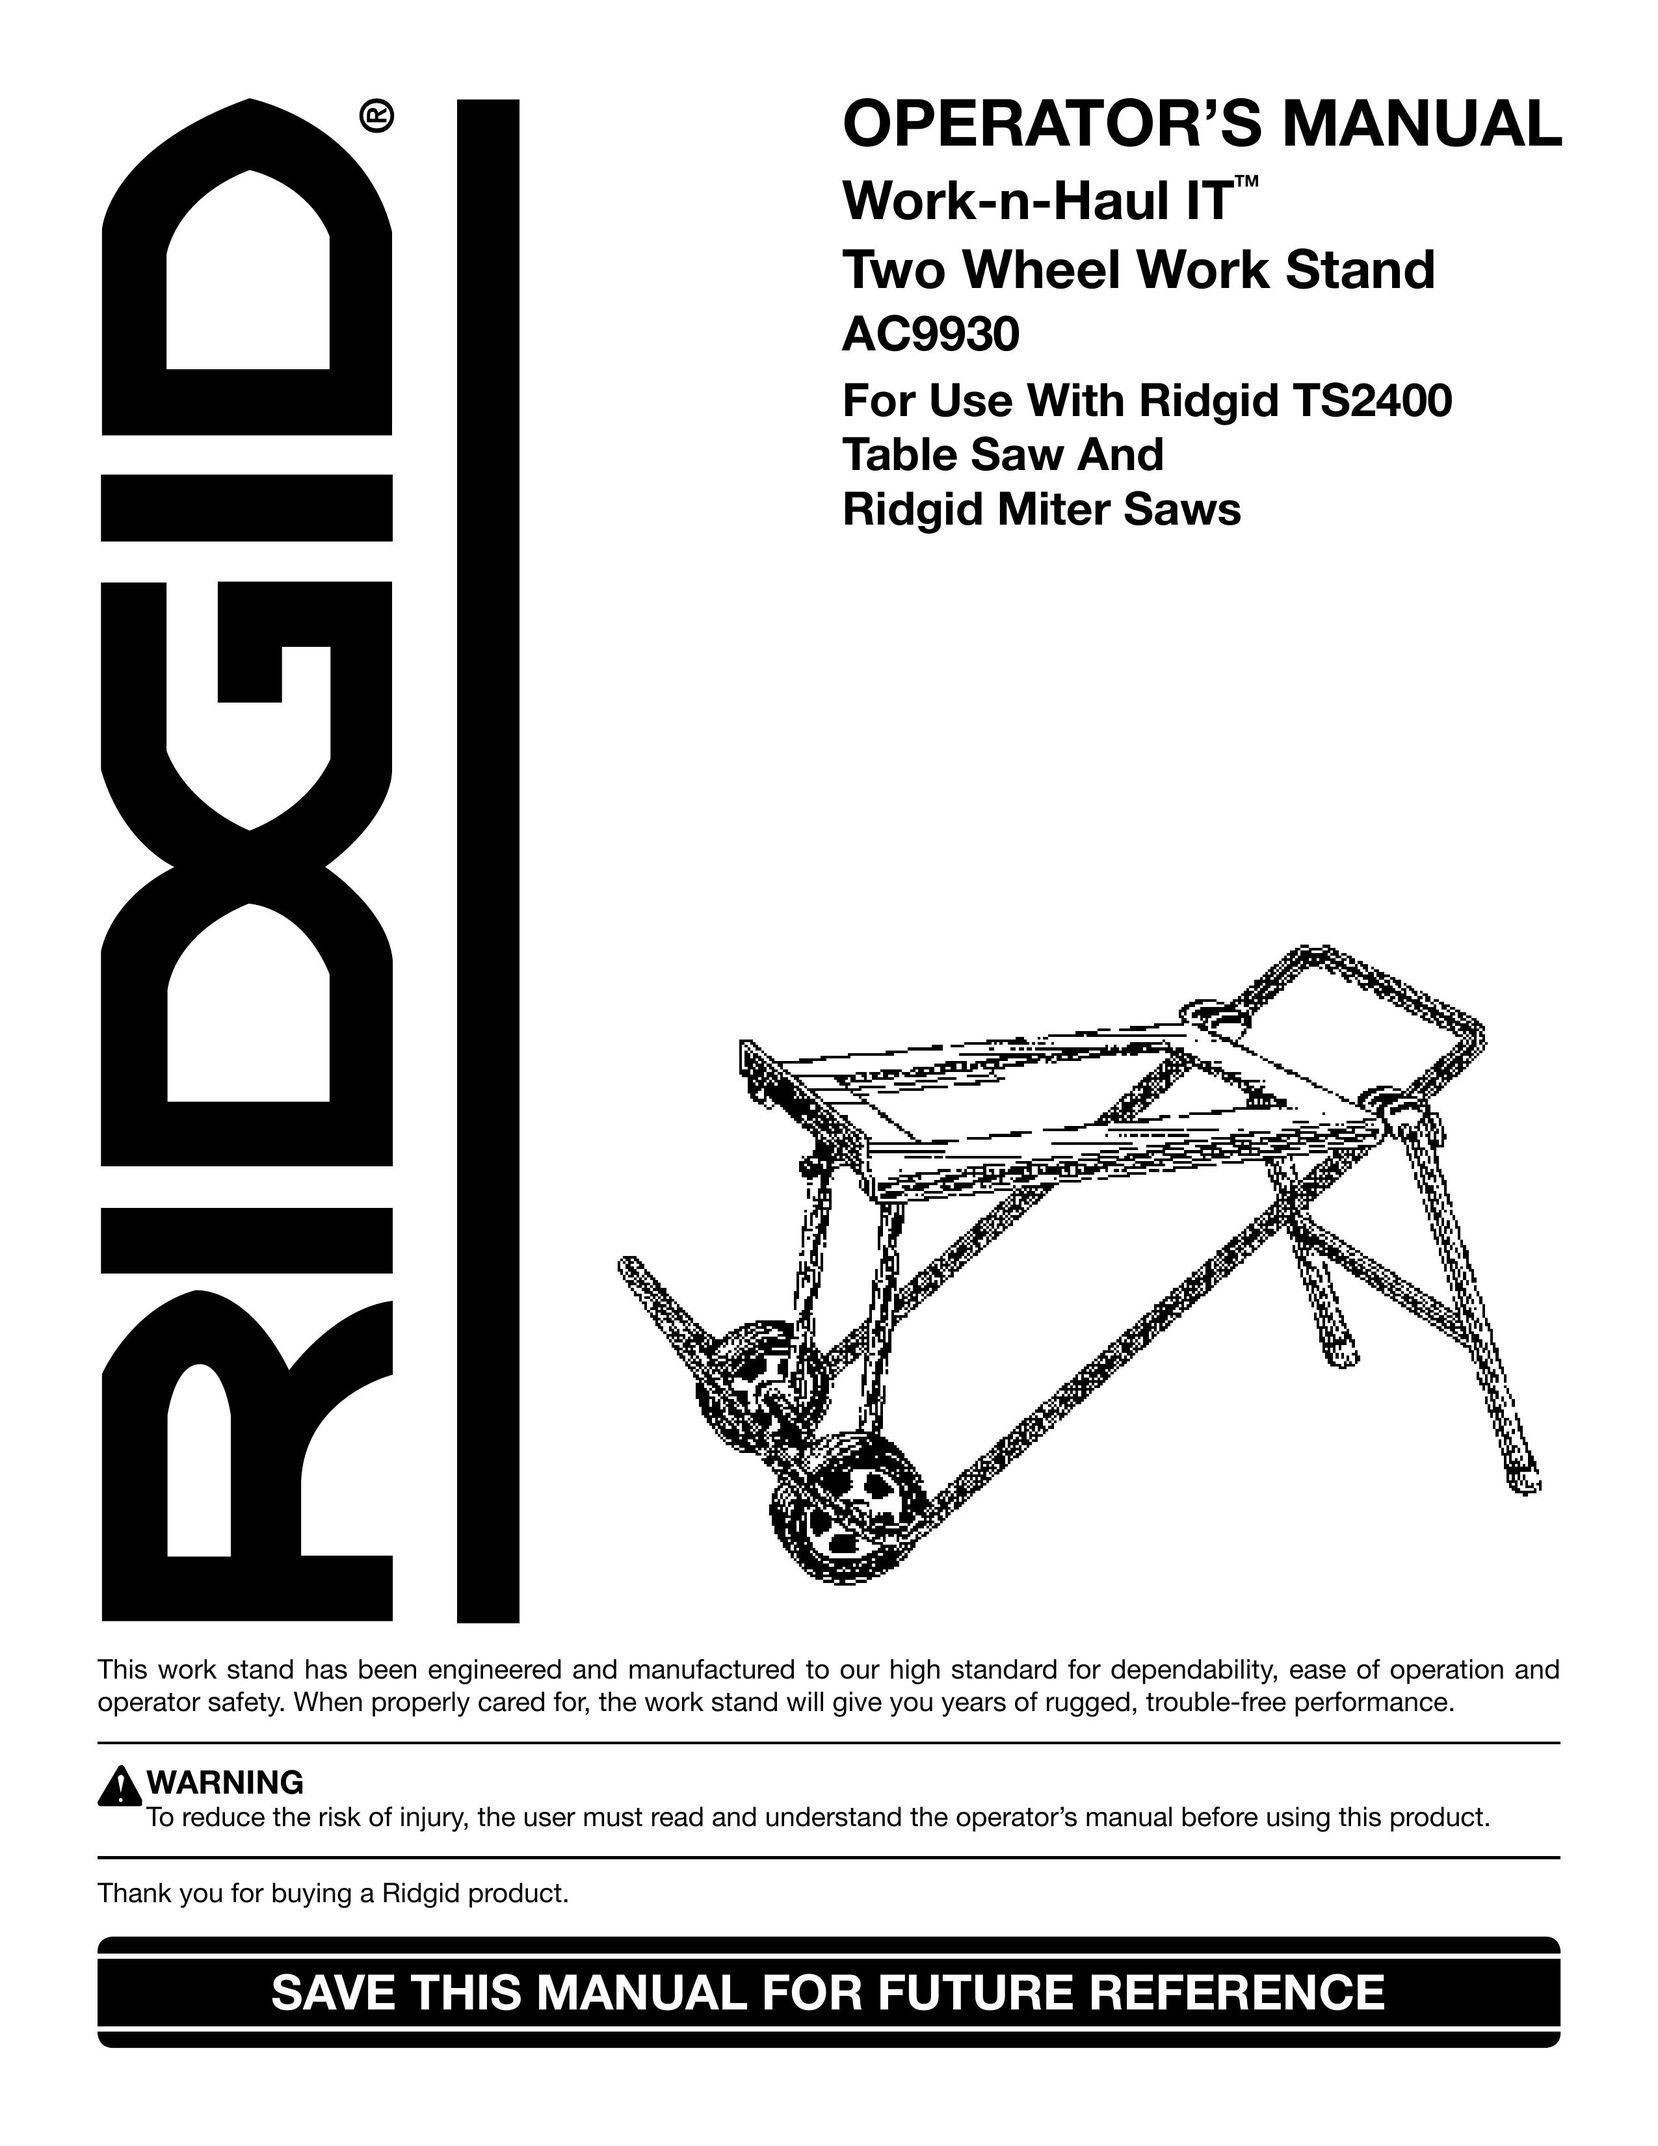 RIDGID TS2400 Saw User Manual